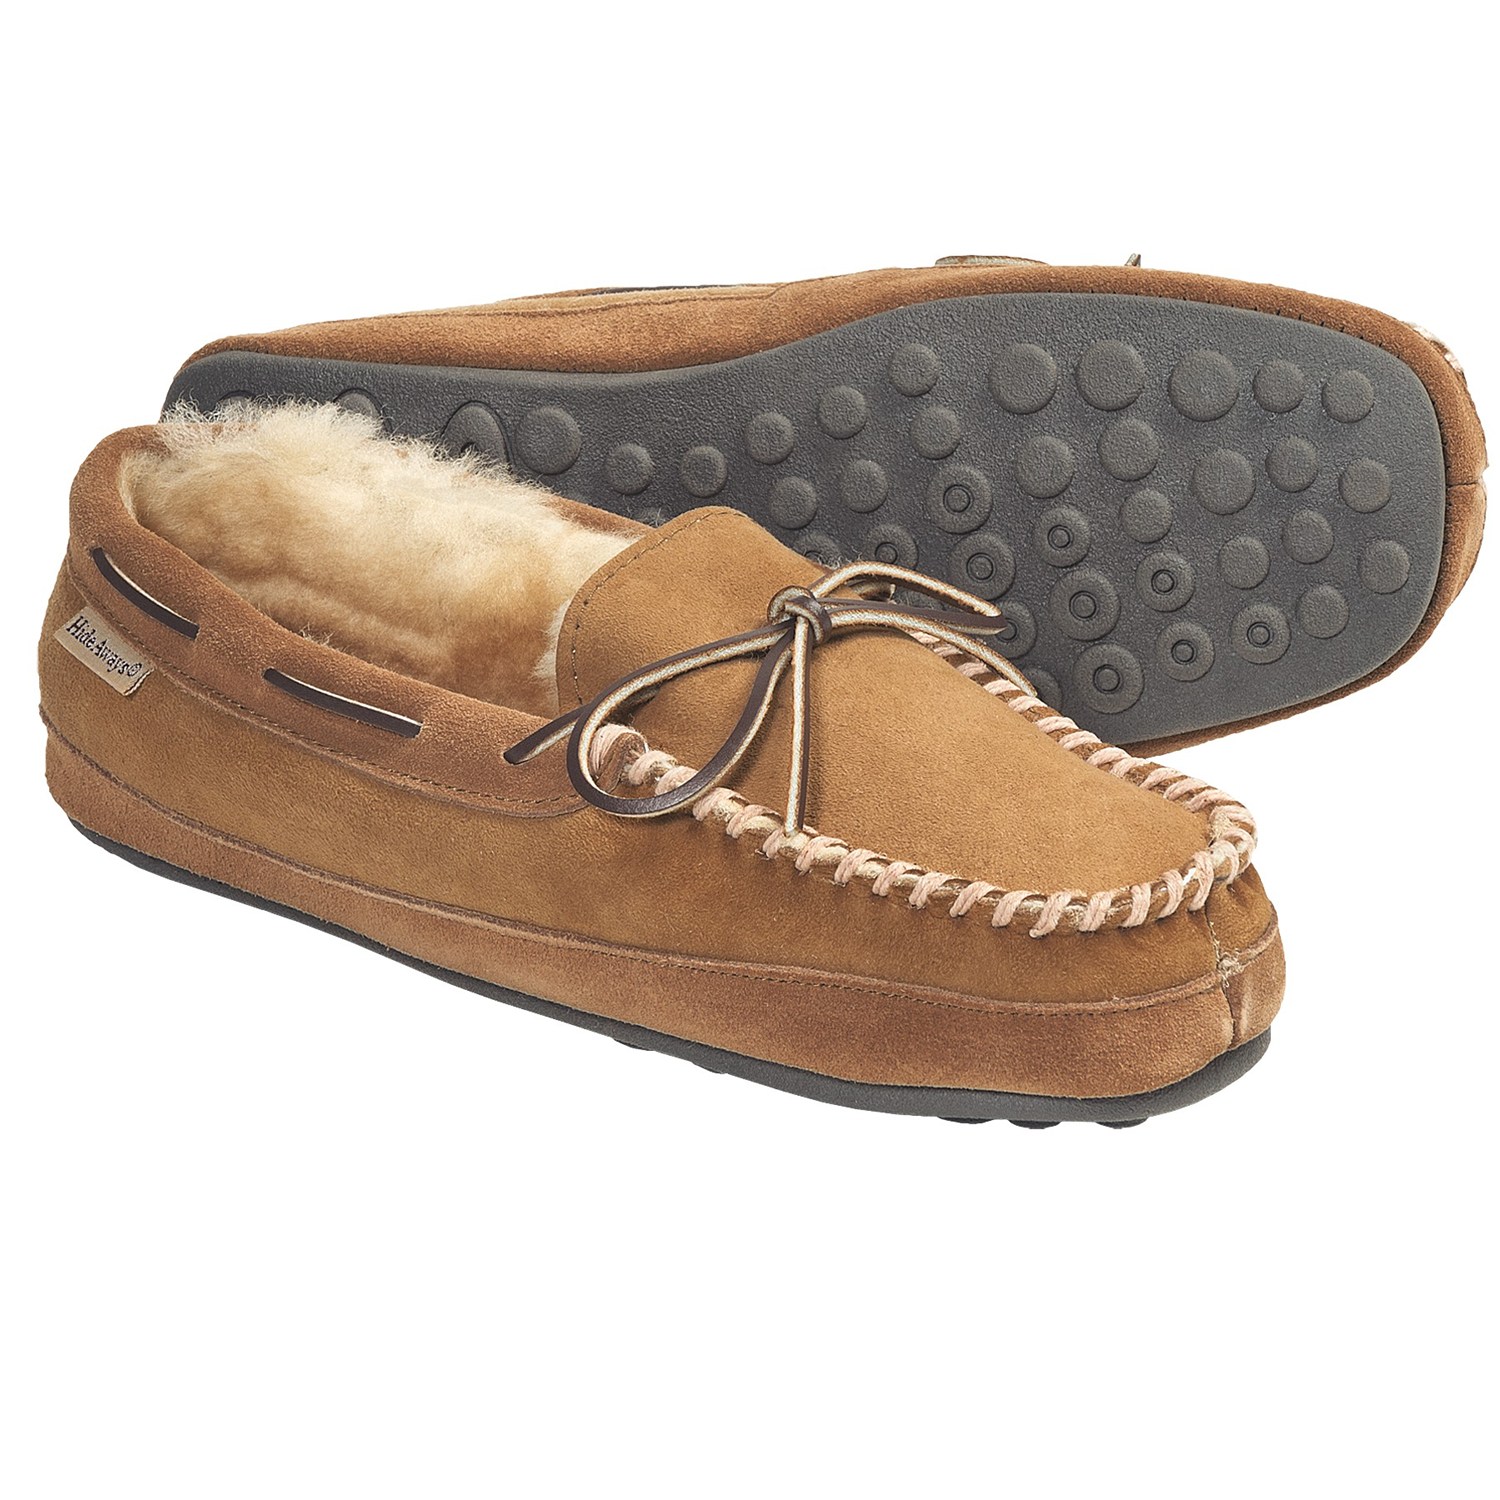 lb-evans-hideaways-eastlake-slippers-shearling-for-men-in-natural~p~5422r_01~1500.3